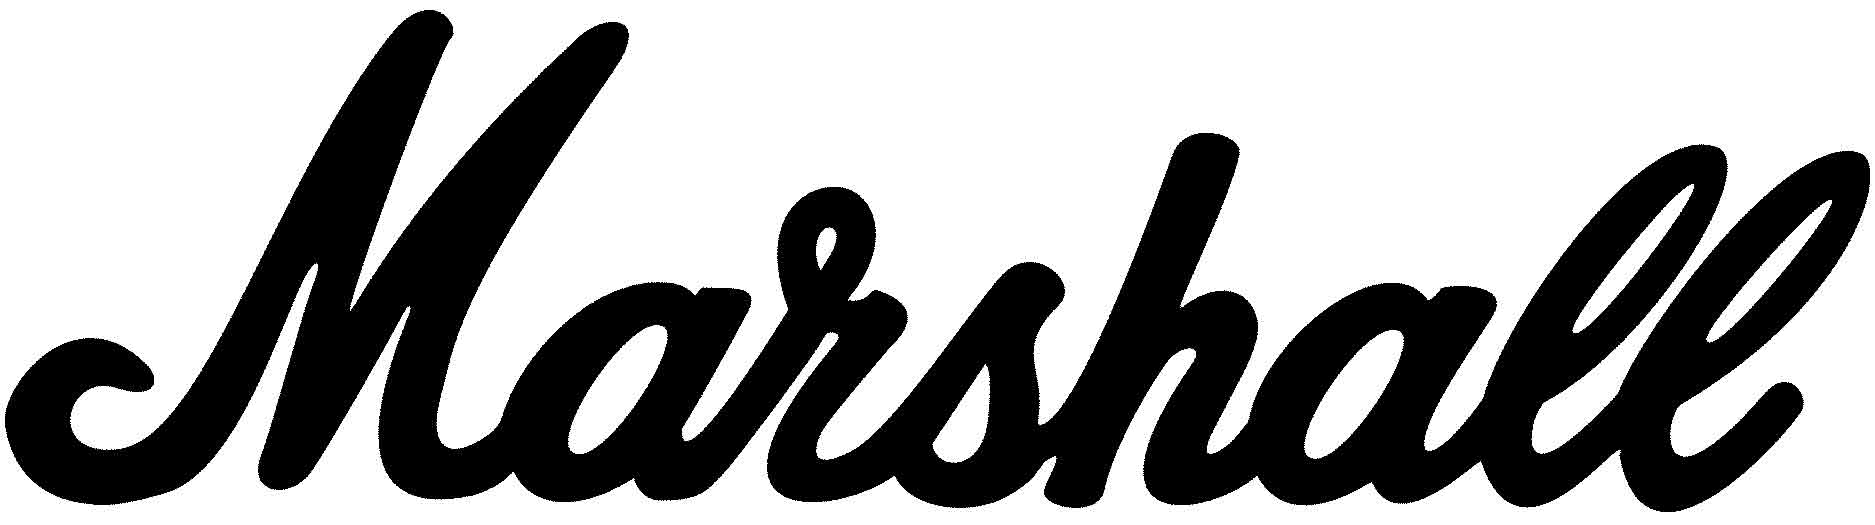 White Marshall Logo - Marshall Logos